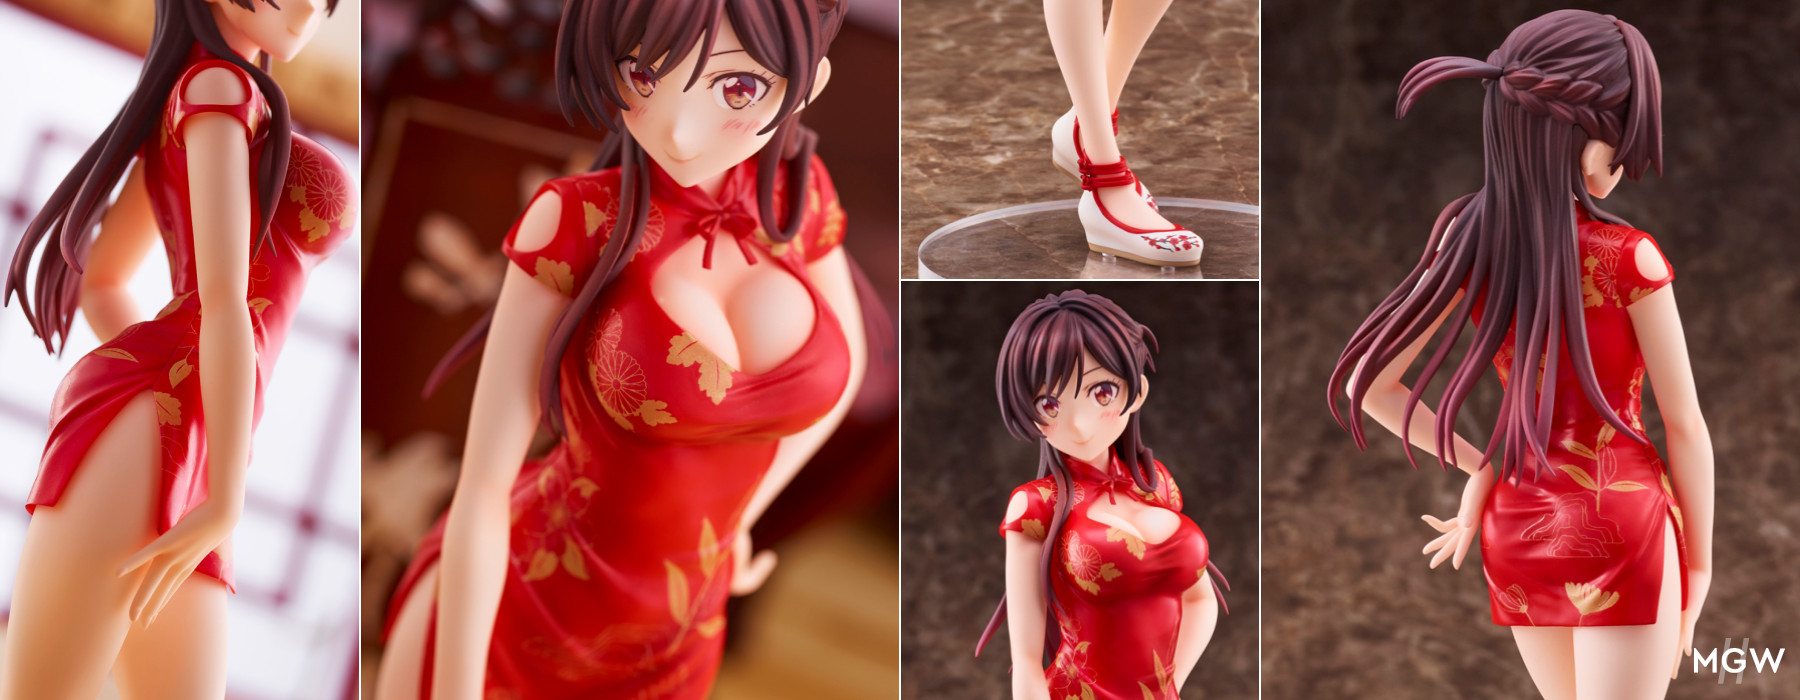 Mizuhara Chizuru China Dress Ver. by Union Creative from Rent A Girlfriend MyGrailWatch Anime Figure Guide